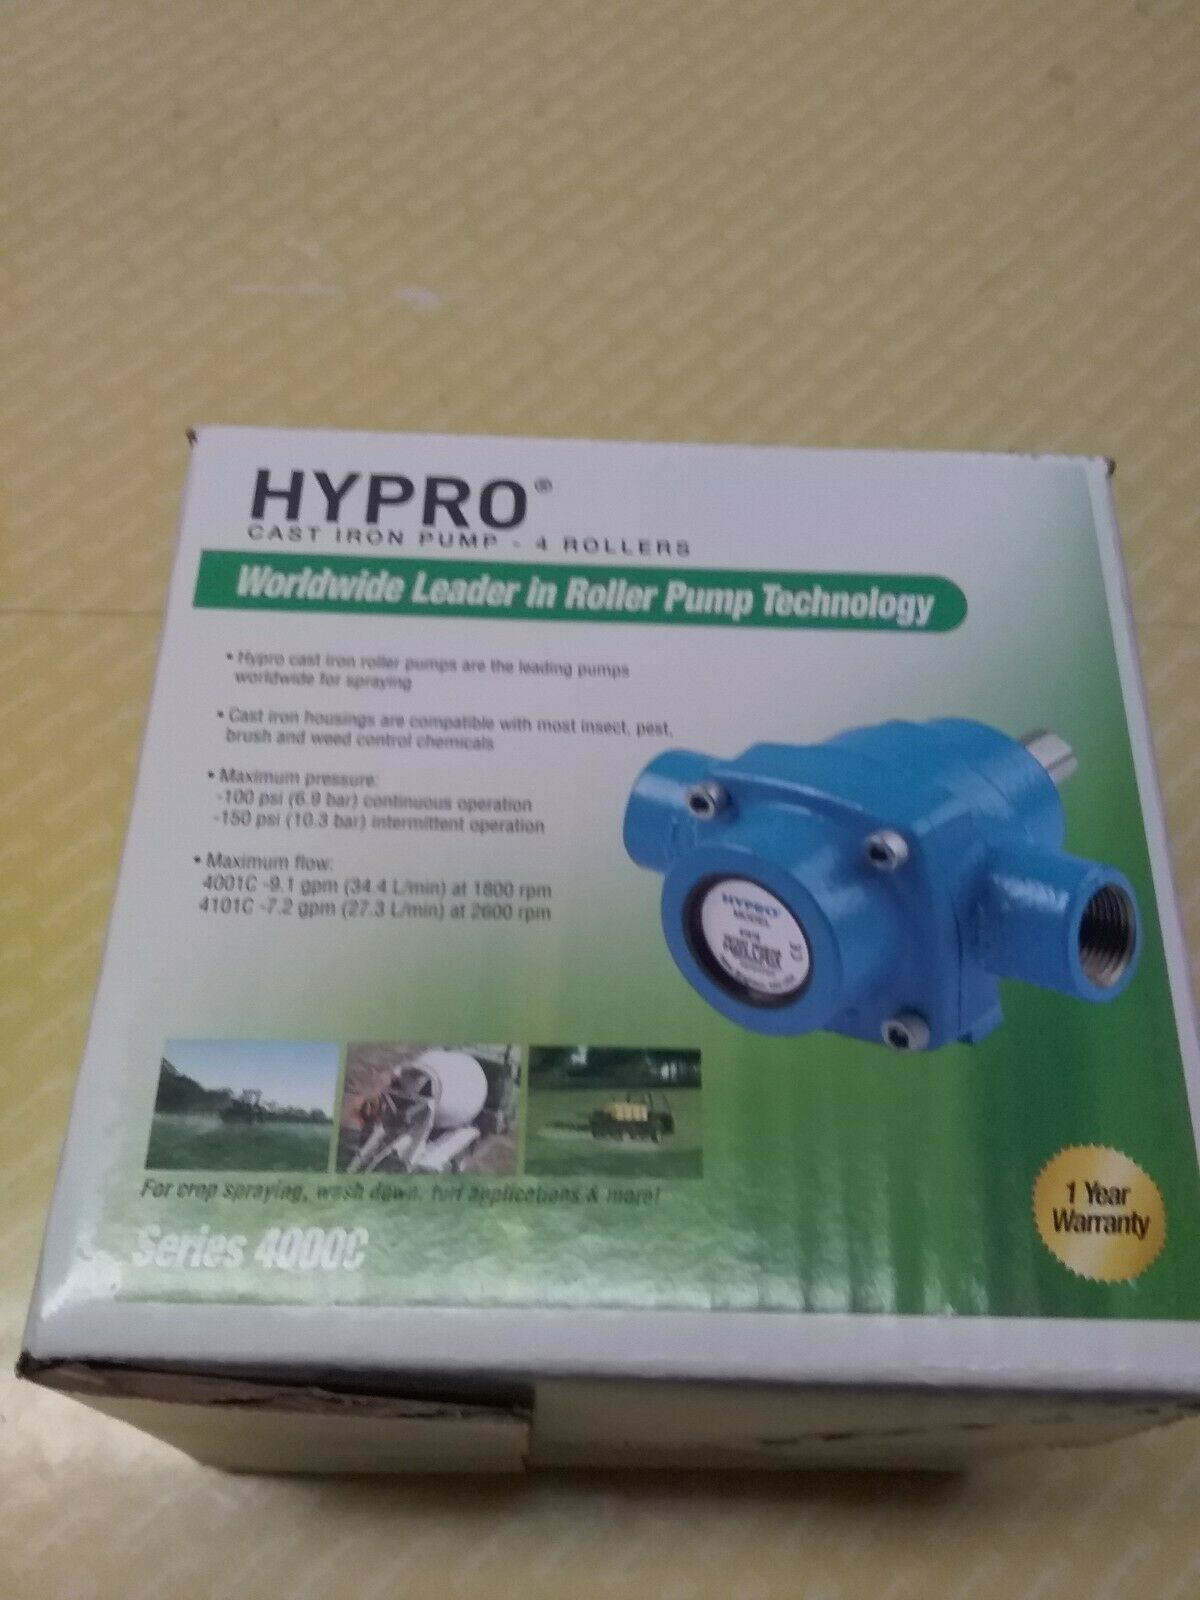 Hypro Cast Iron Pump-4 Rollers 4000c